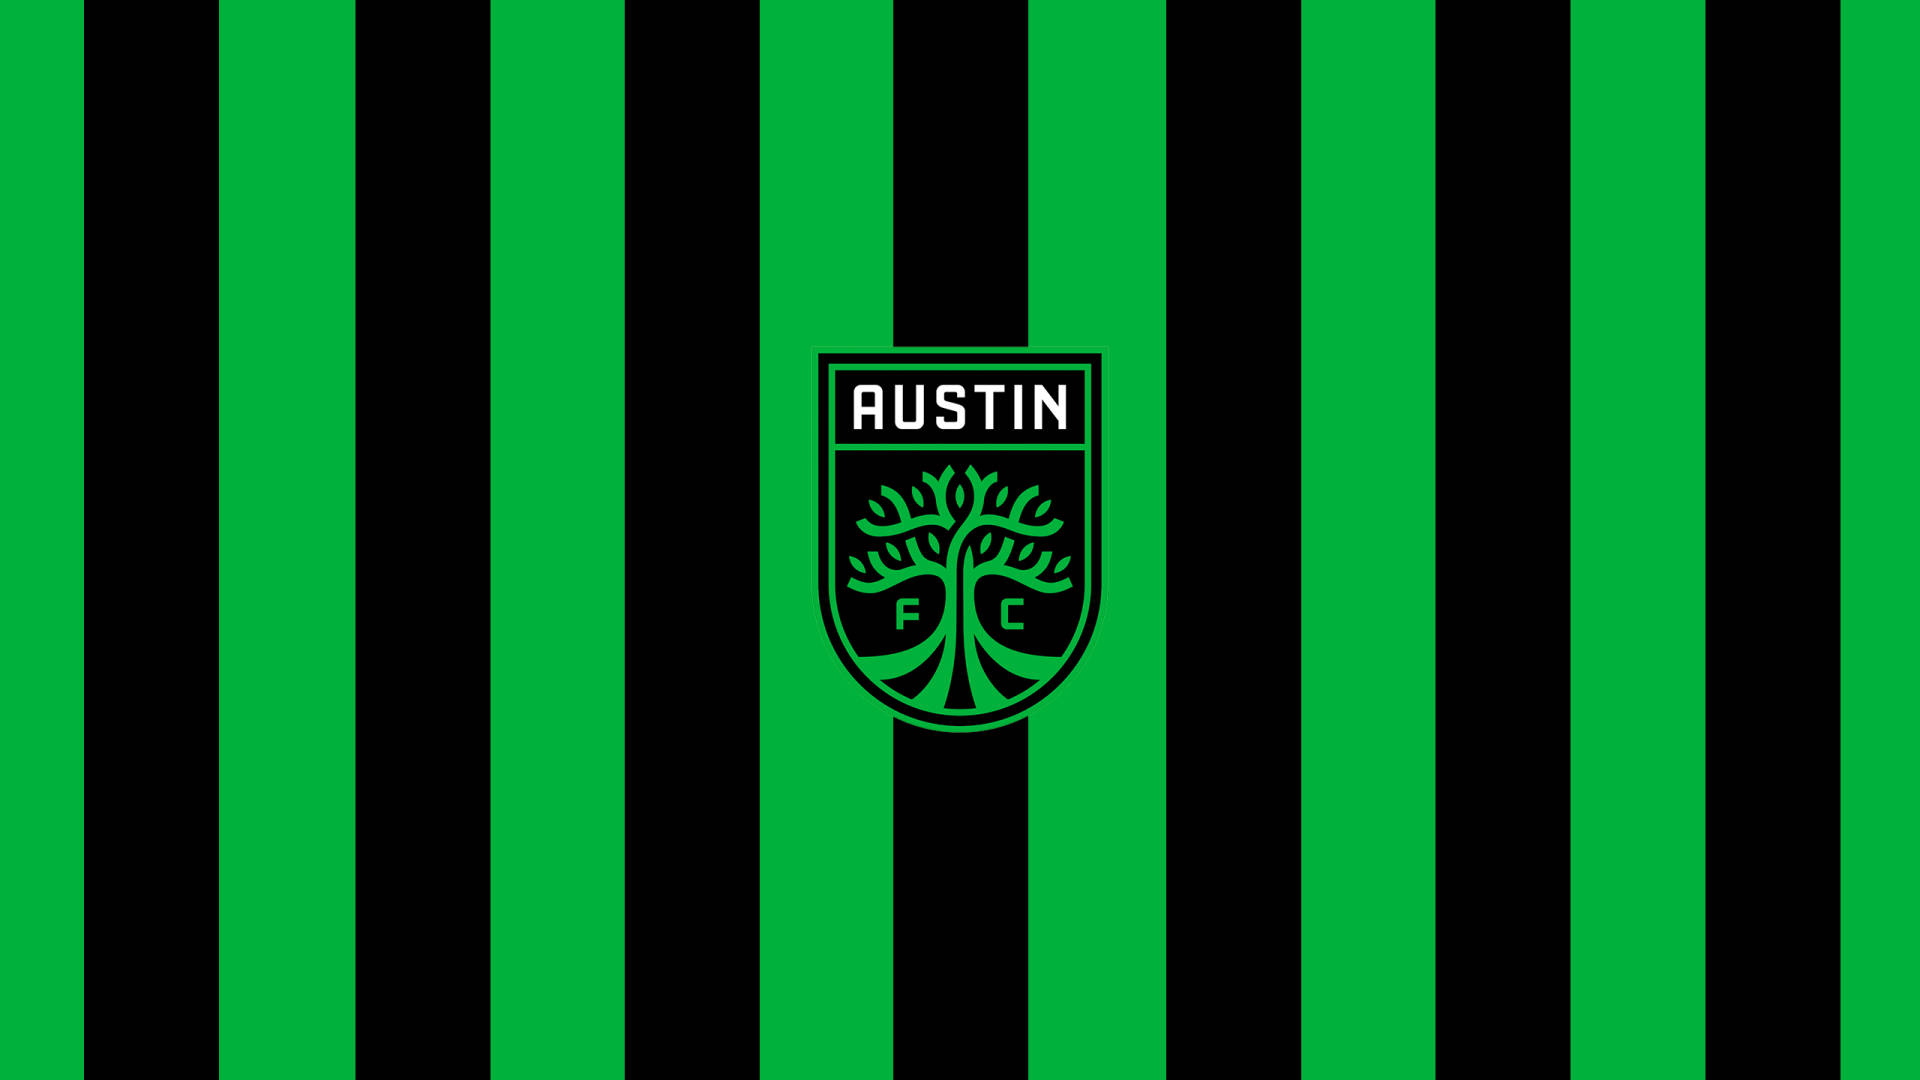 Austin FC Club logo engulfed in a vivid green pattern Wallpaper